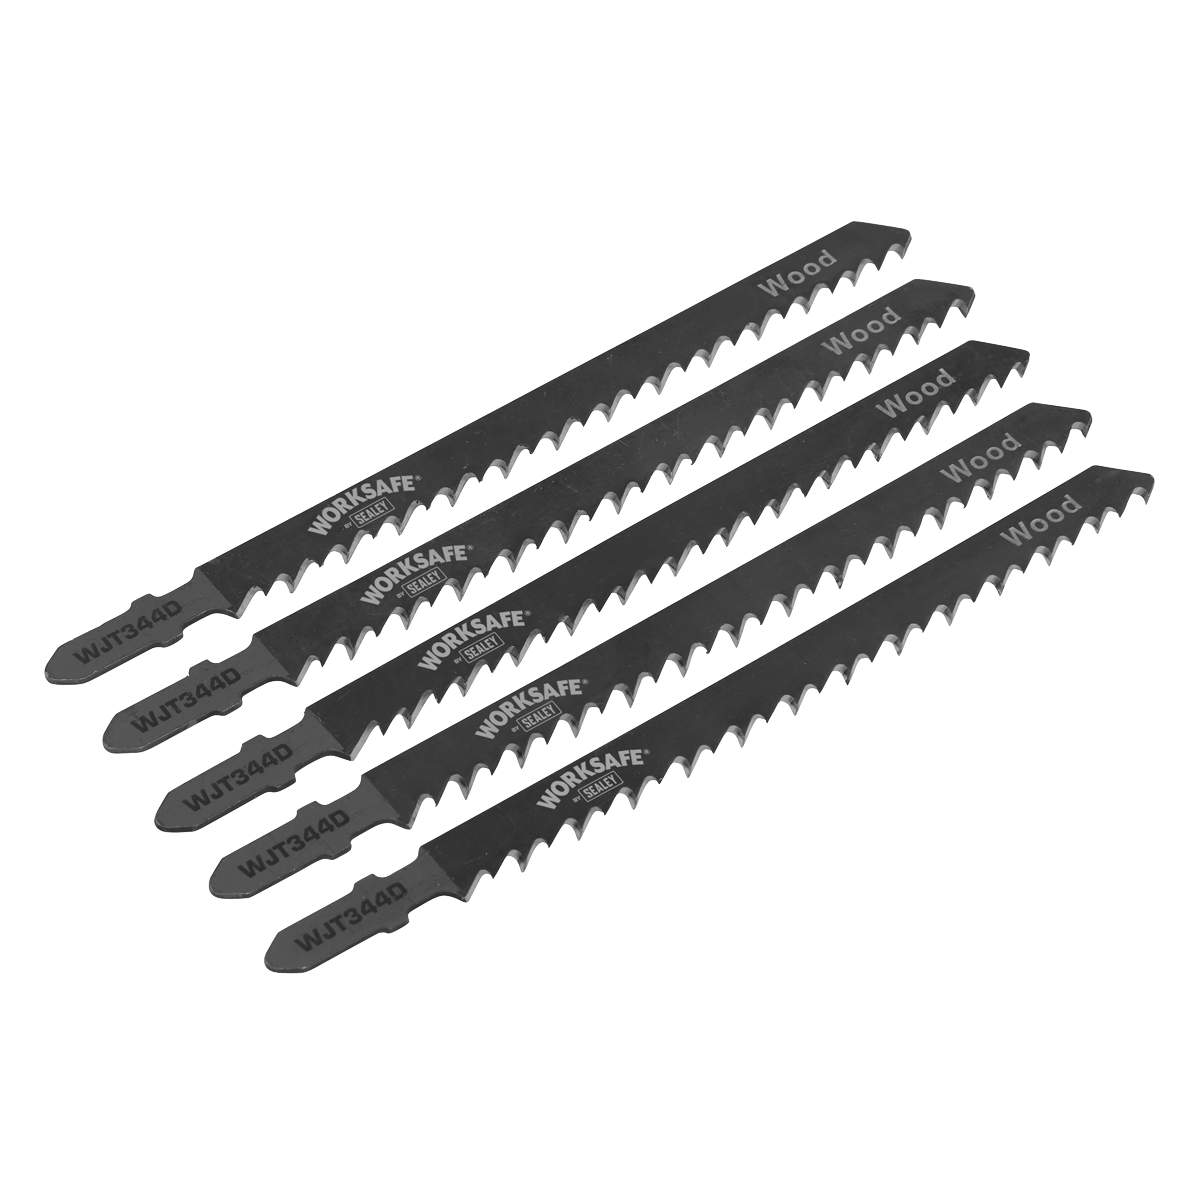 Jigsaw Blade Wood 105mm 6tpi - Pack of 5